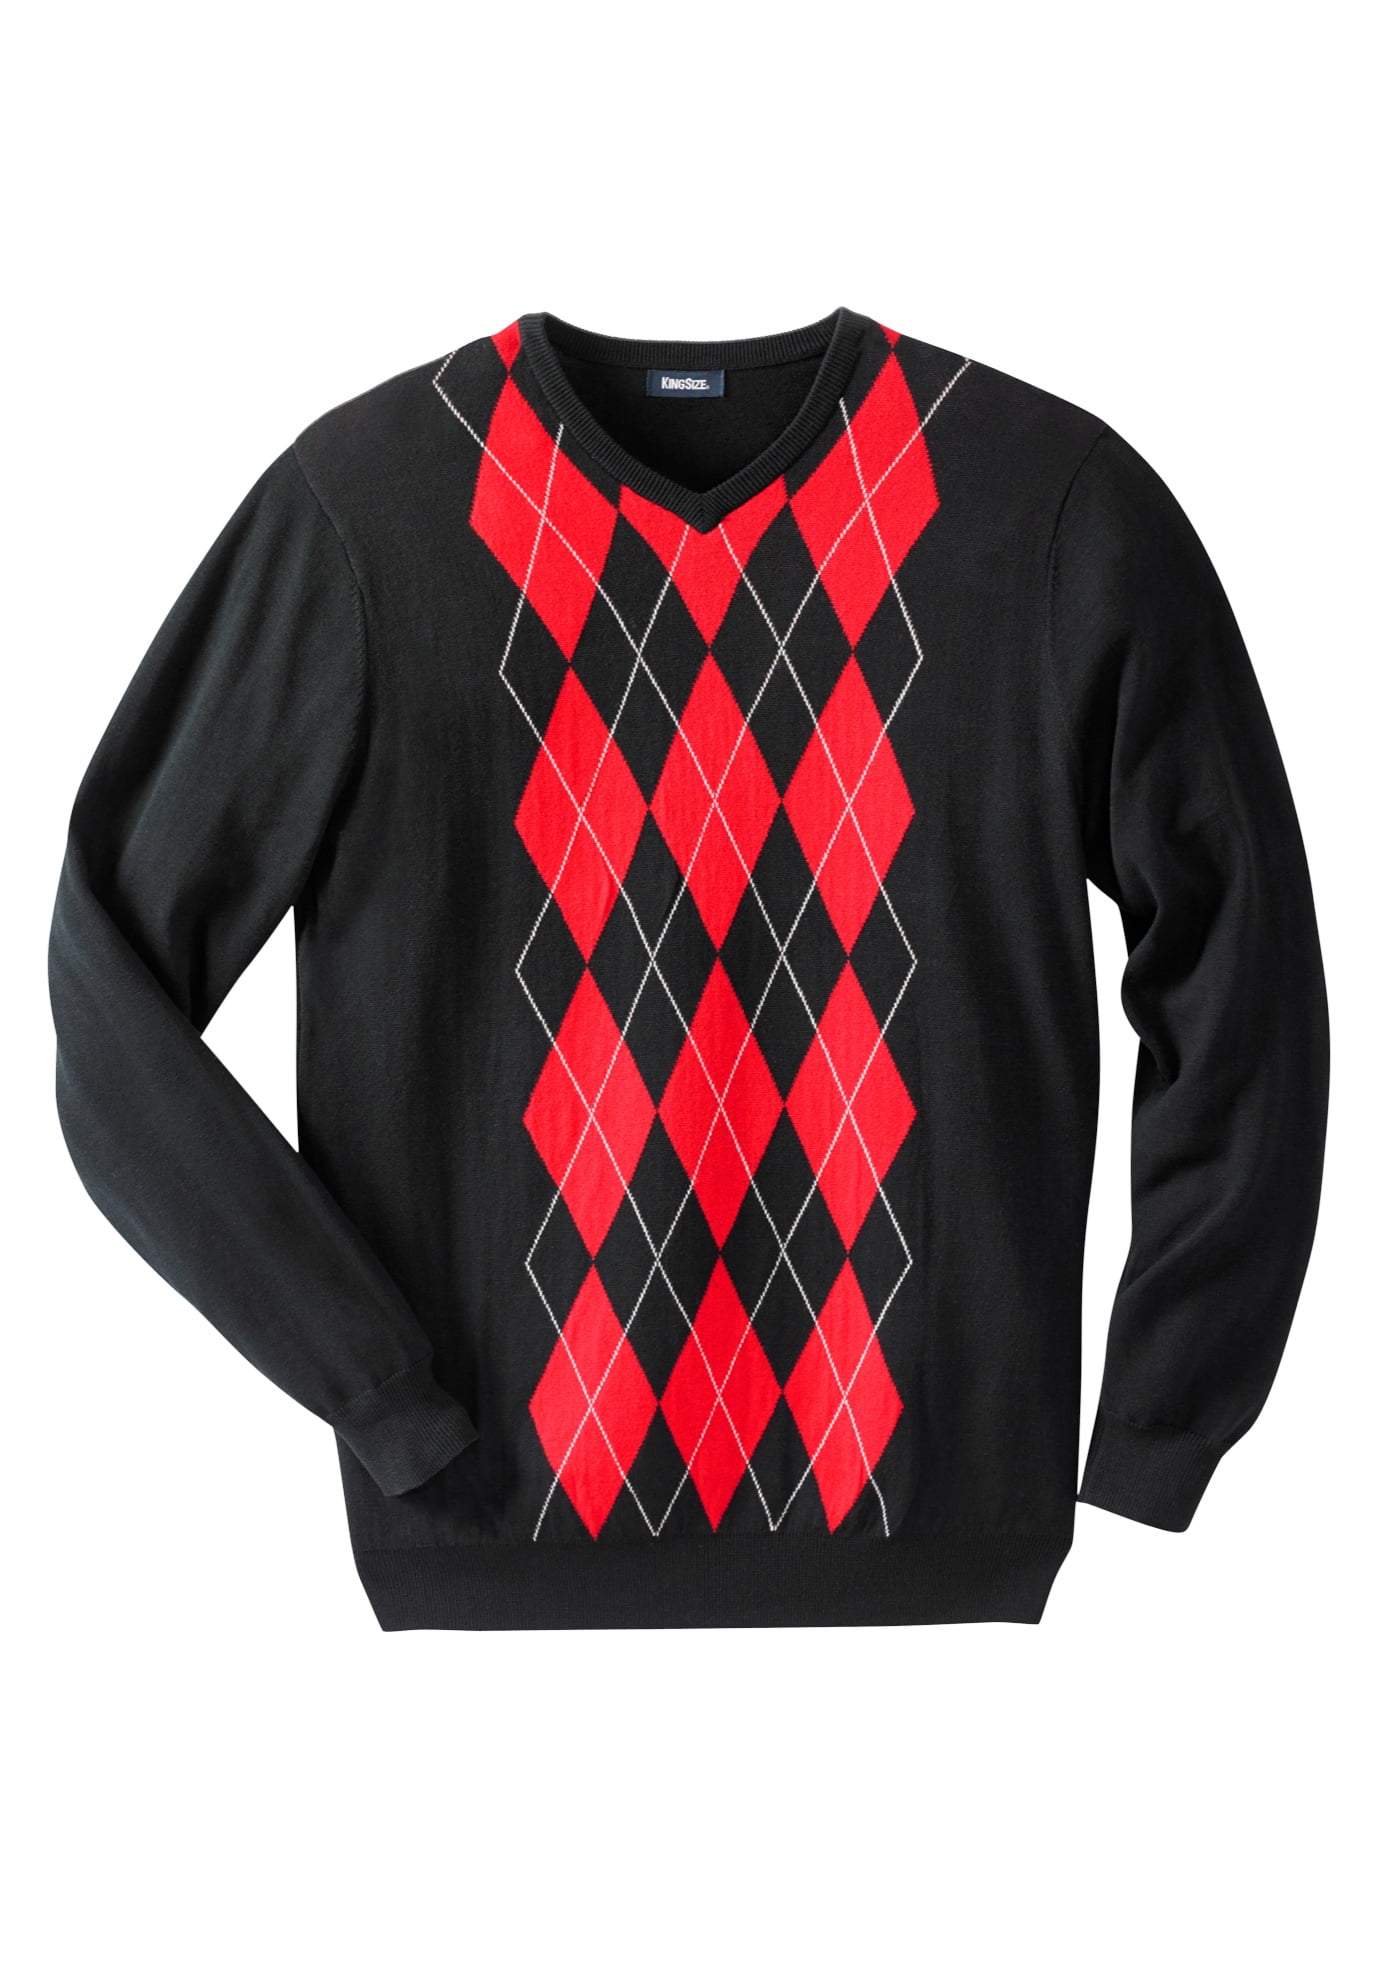 Kingsize Men's Big & Tall V-Neck Argyle Sweater - Walmart.com